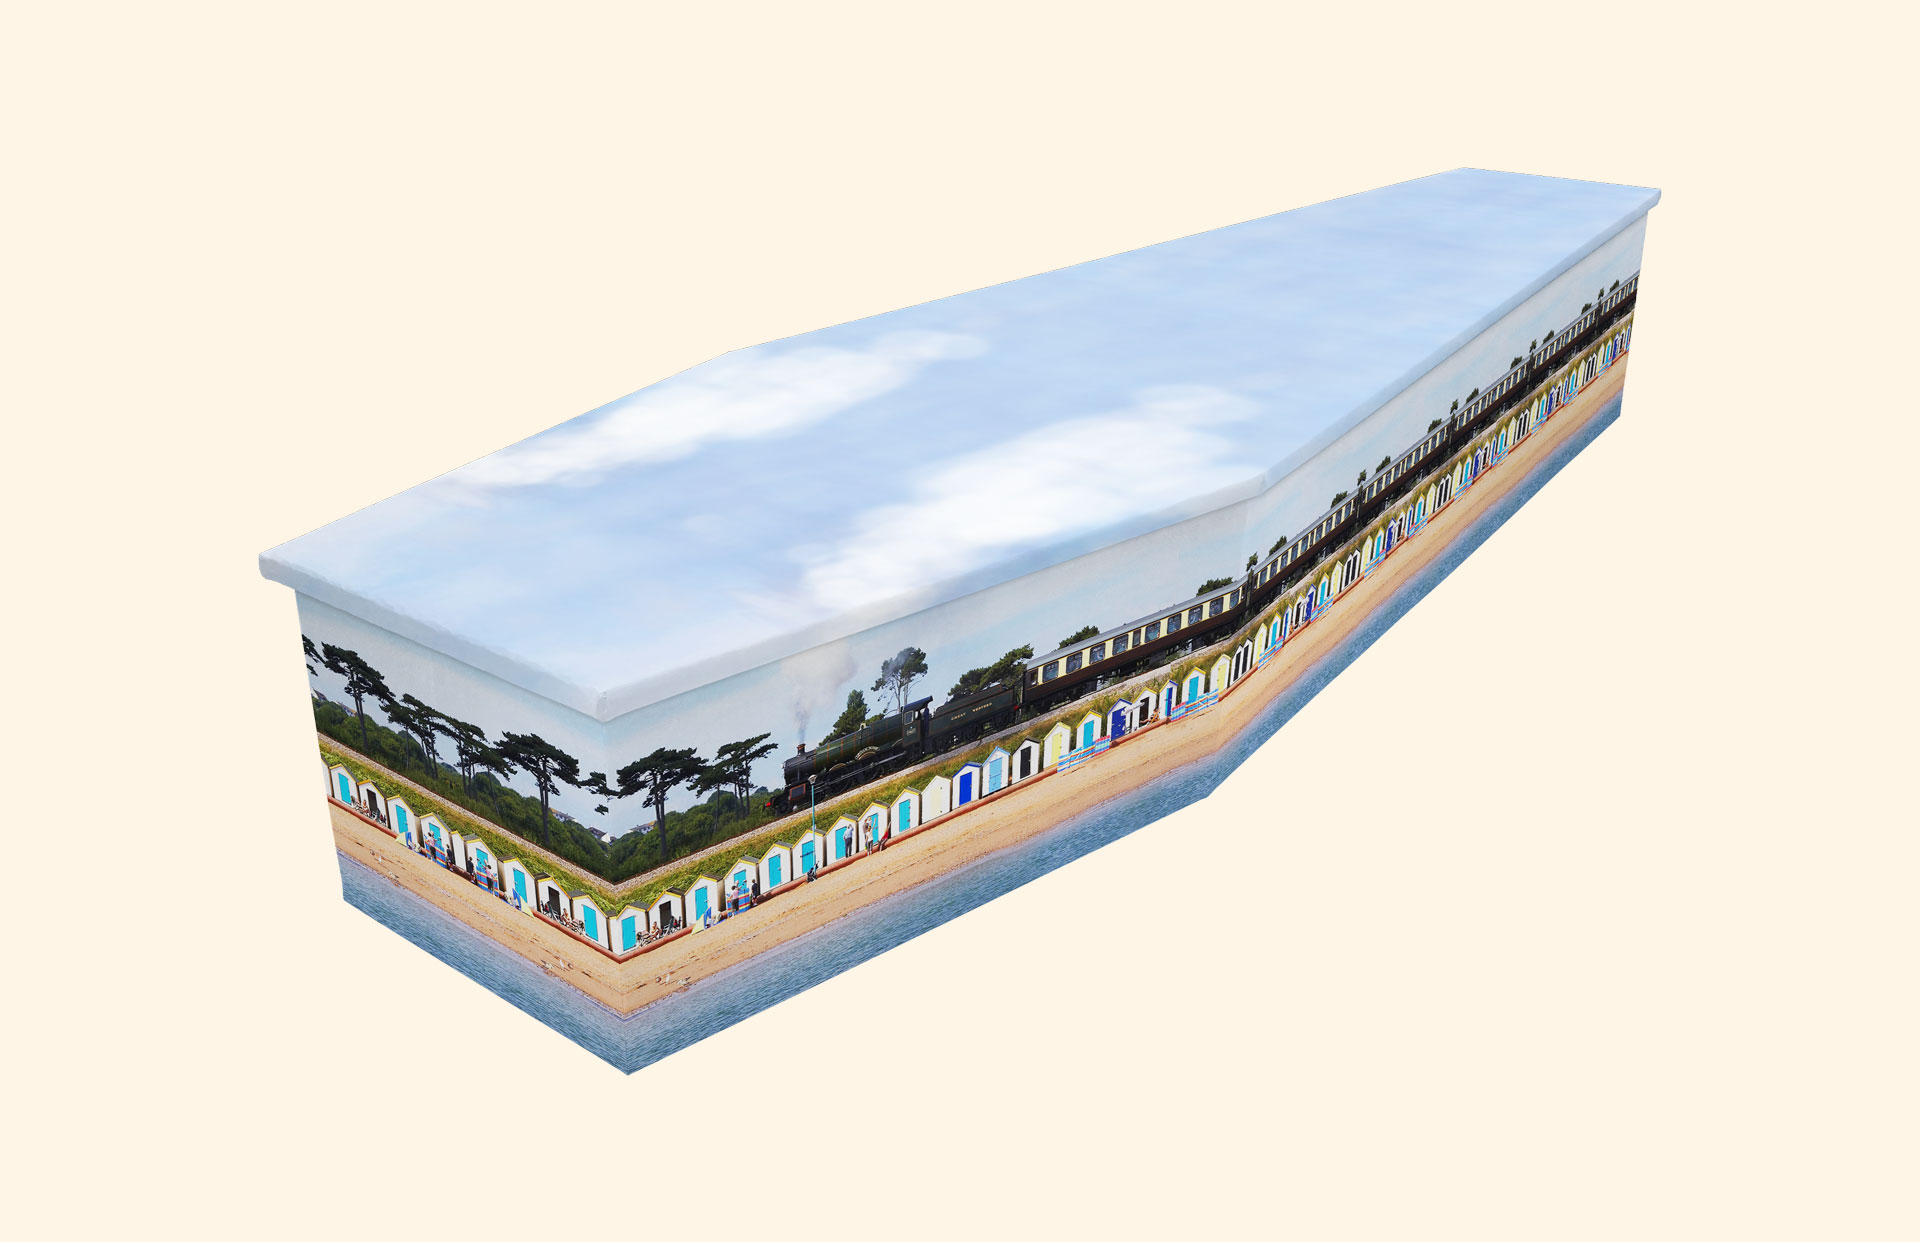 Seaside Train design on a cardboard coffin